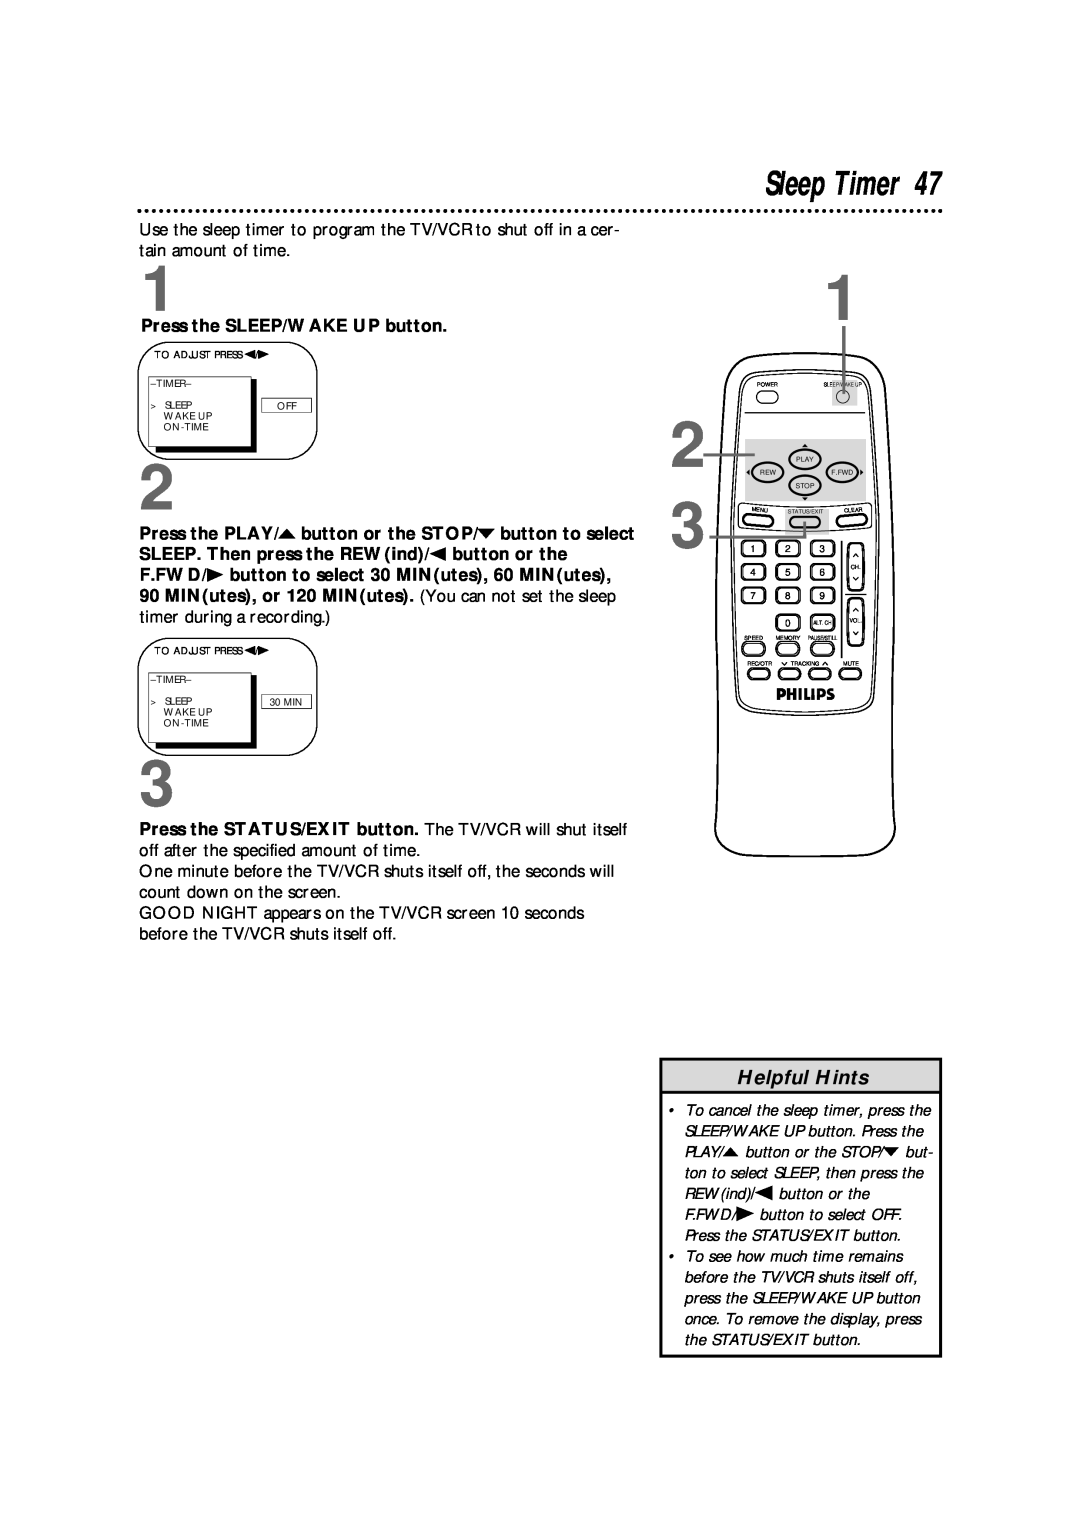 Philips CCB190AT, CCB 132AT, CCB 192AT owner manual Sleep Timer, Helpful Hints, the STATUS/EXIT button 